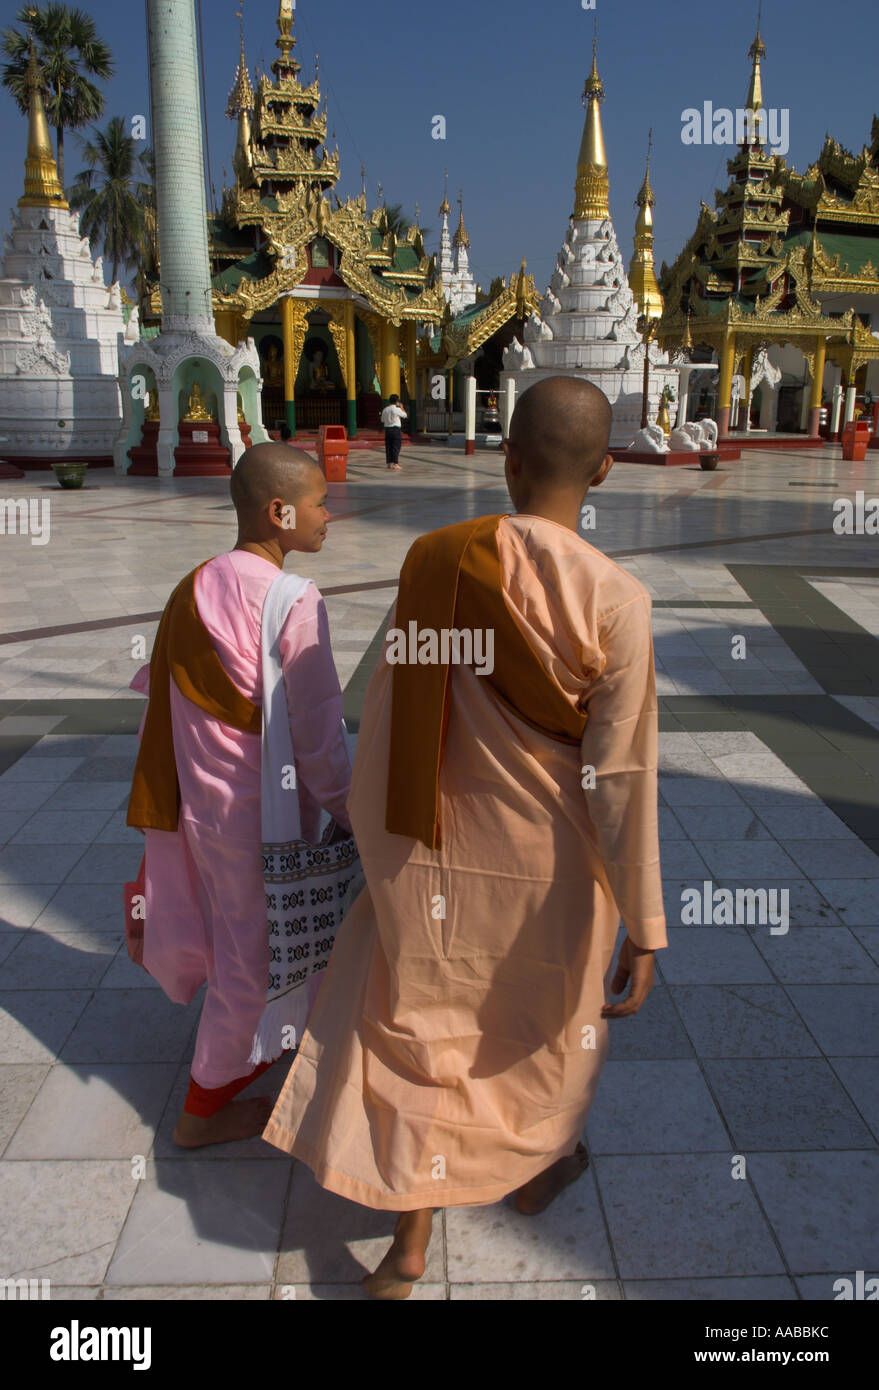 Myanmar Burma Yangon Shwedagon Paya 2 budhidt nuns in traditional pink dress walking about Stock Photo